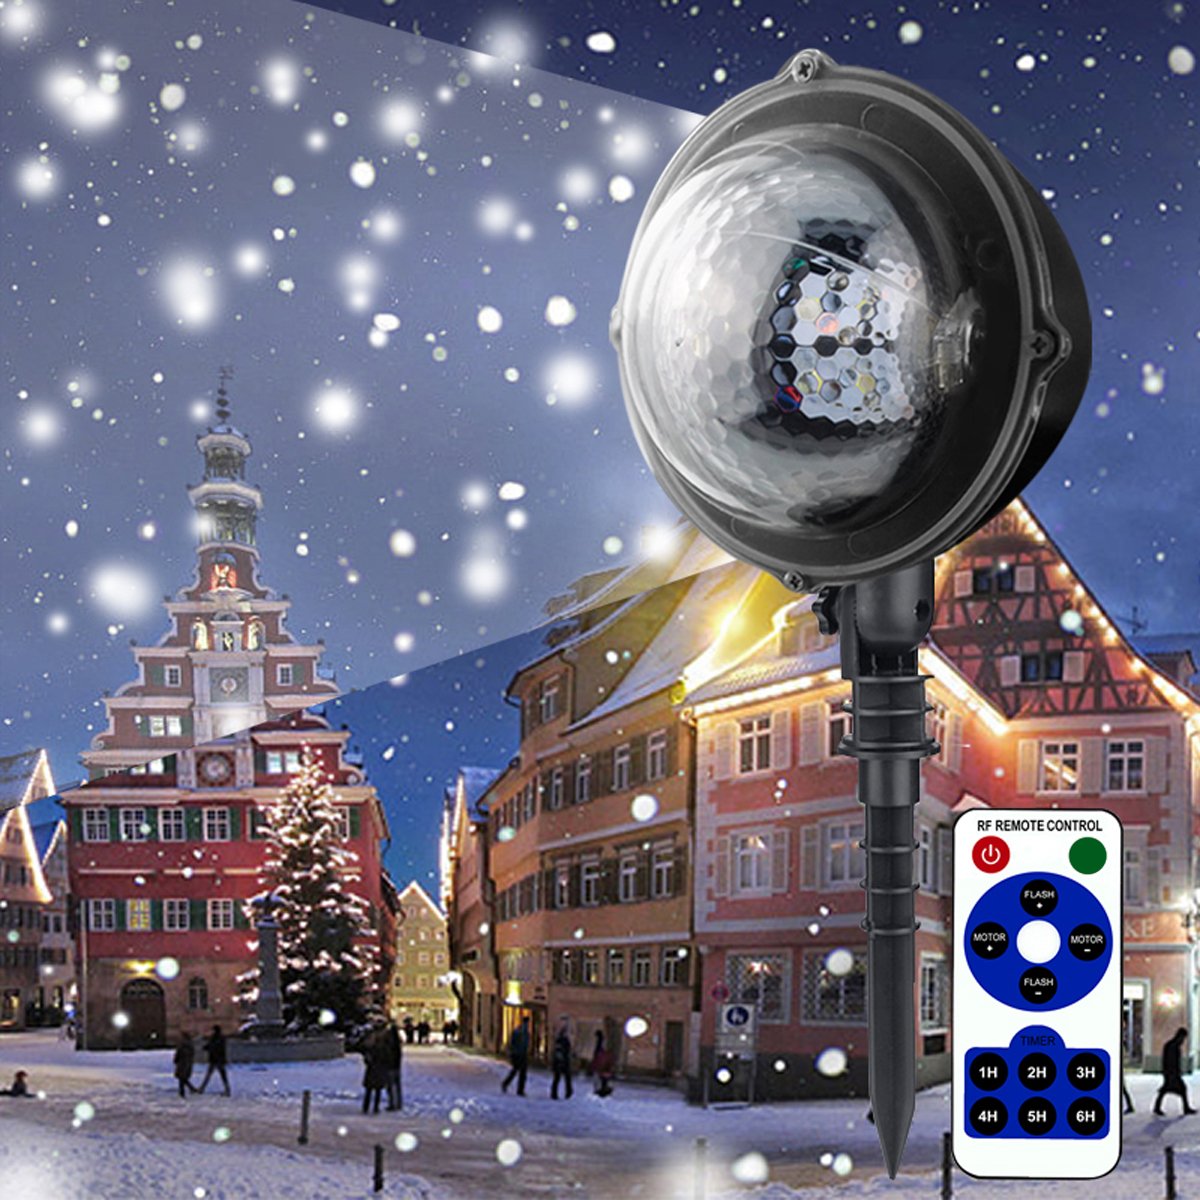 5W Moving Snowflake Snow LED Mini Projector Light Adjustable Waterproof Lamp 1